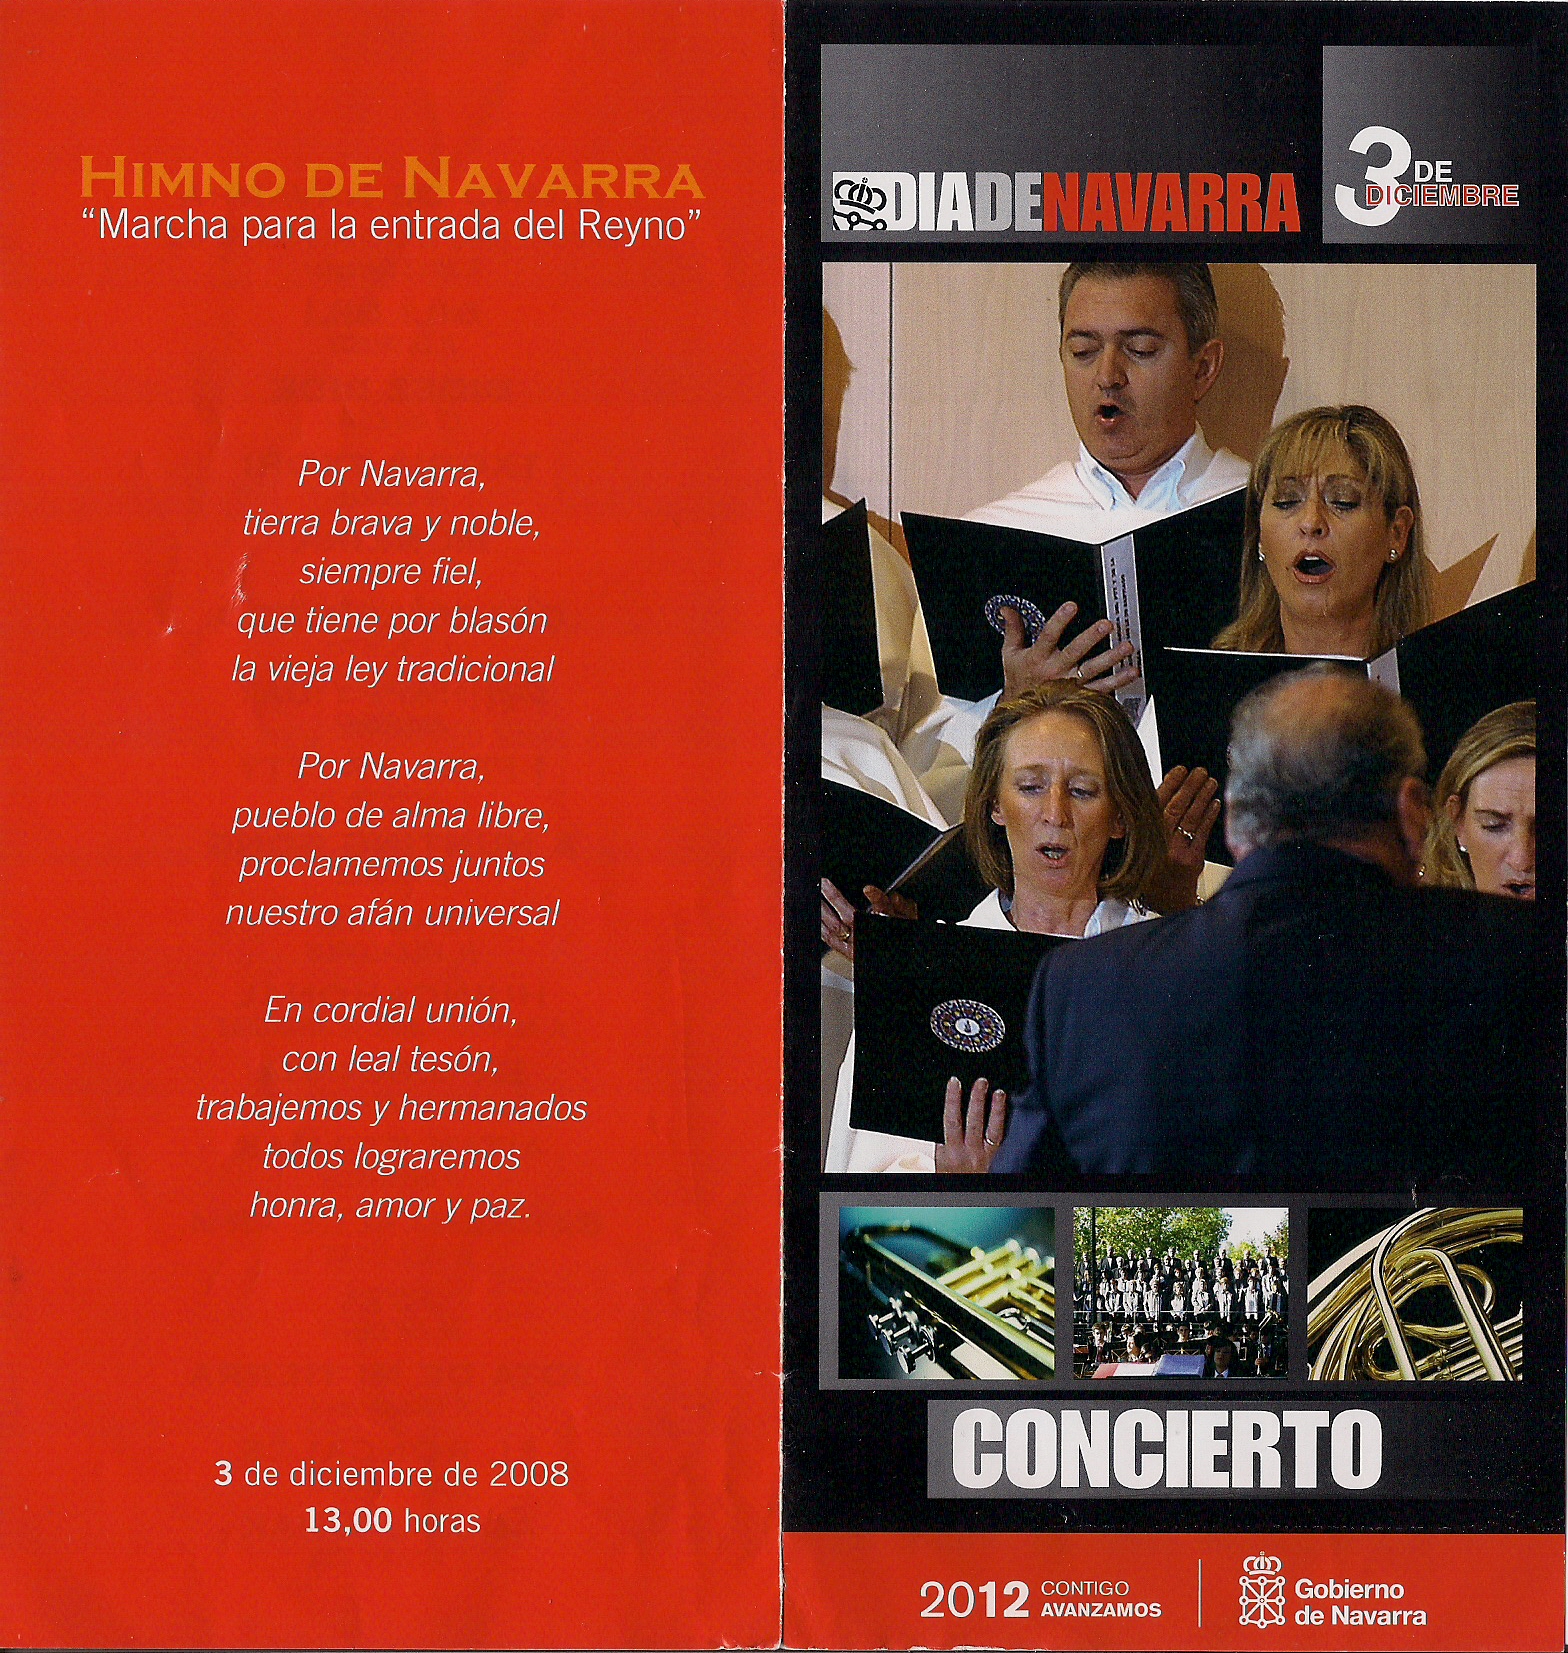 Diciembre, 2008. Roncal (Navarra). Programa